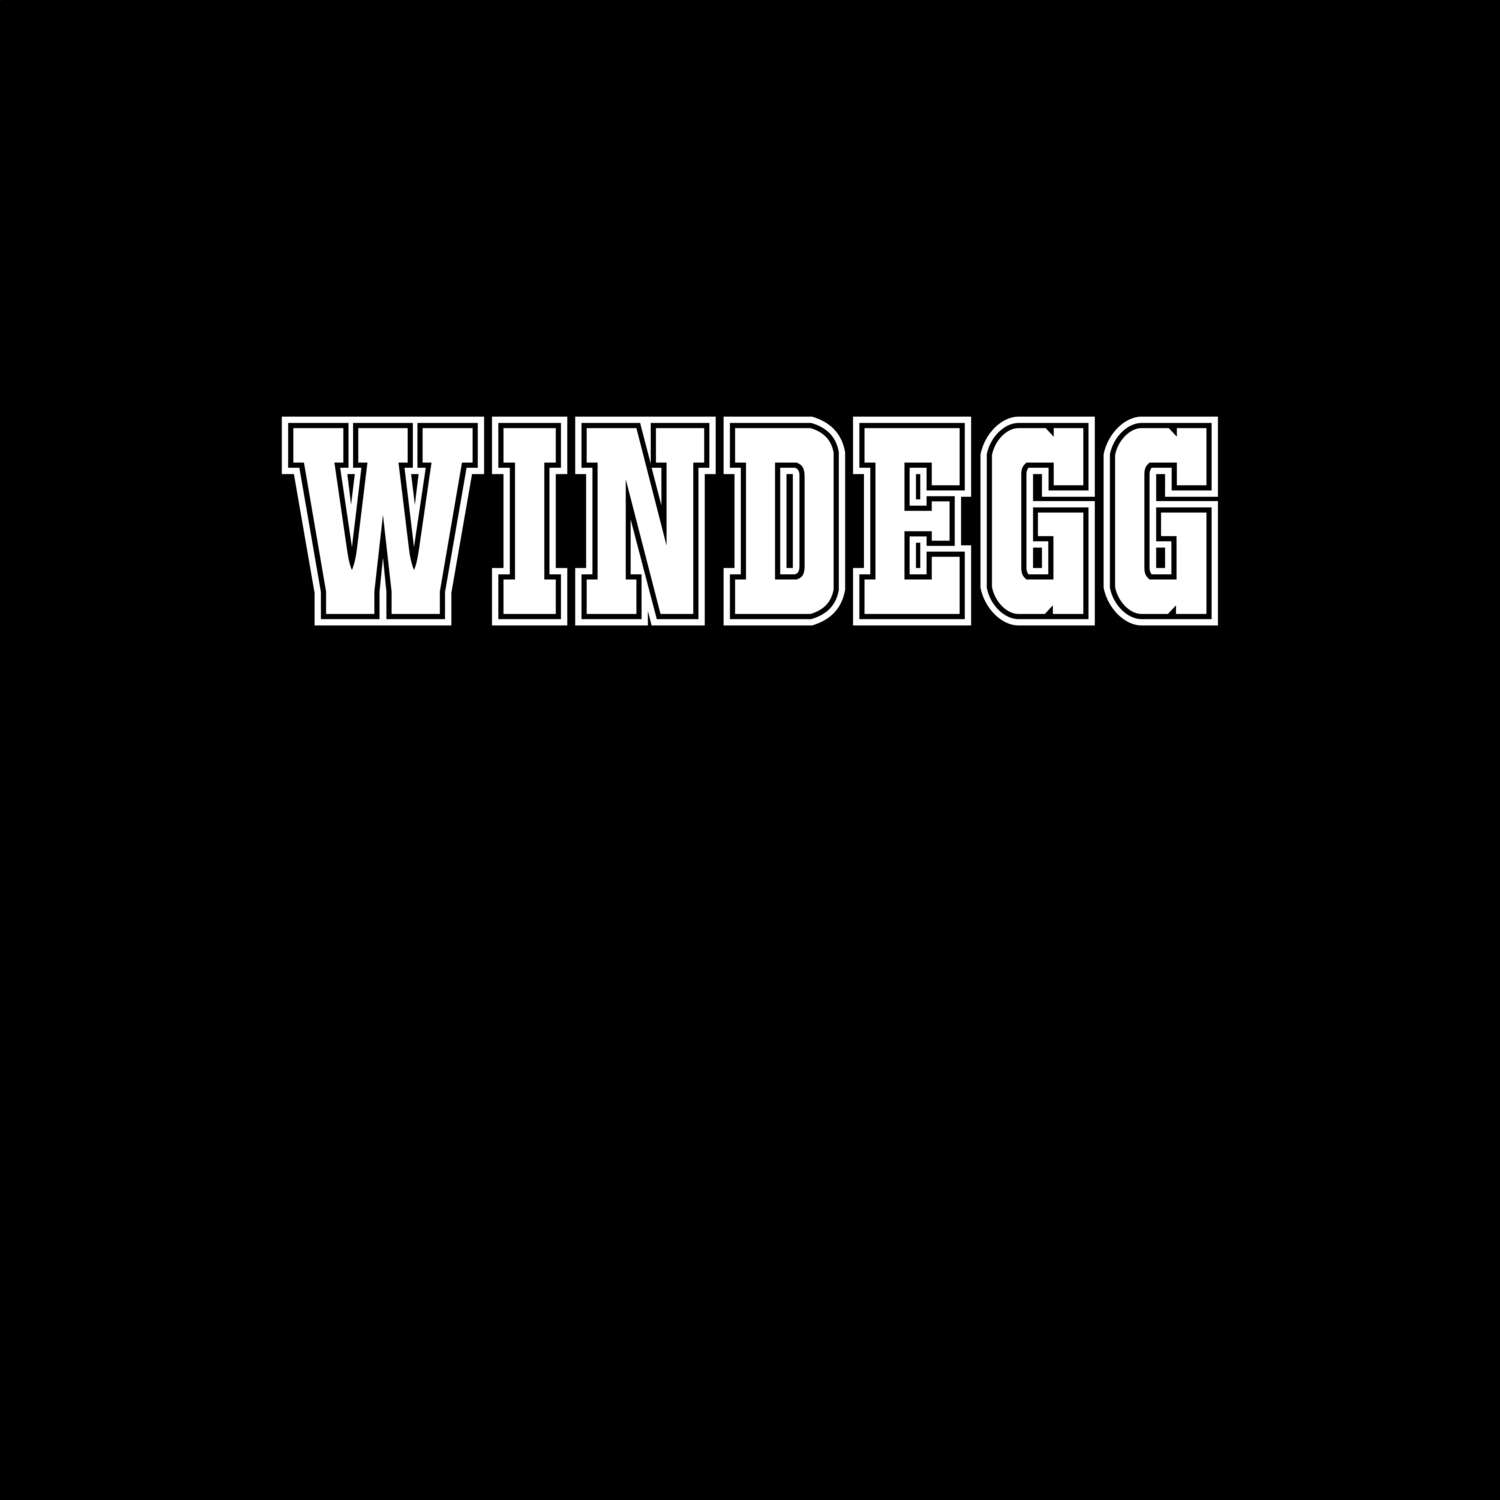 Windegg T-Shirt »Classic«